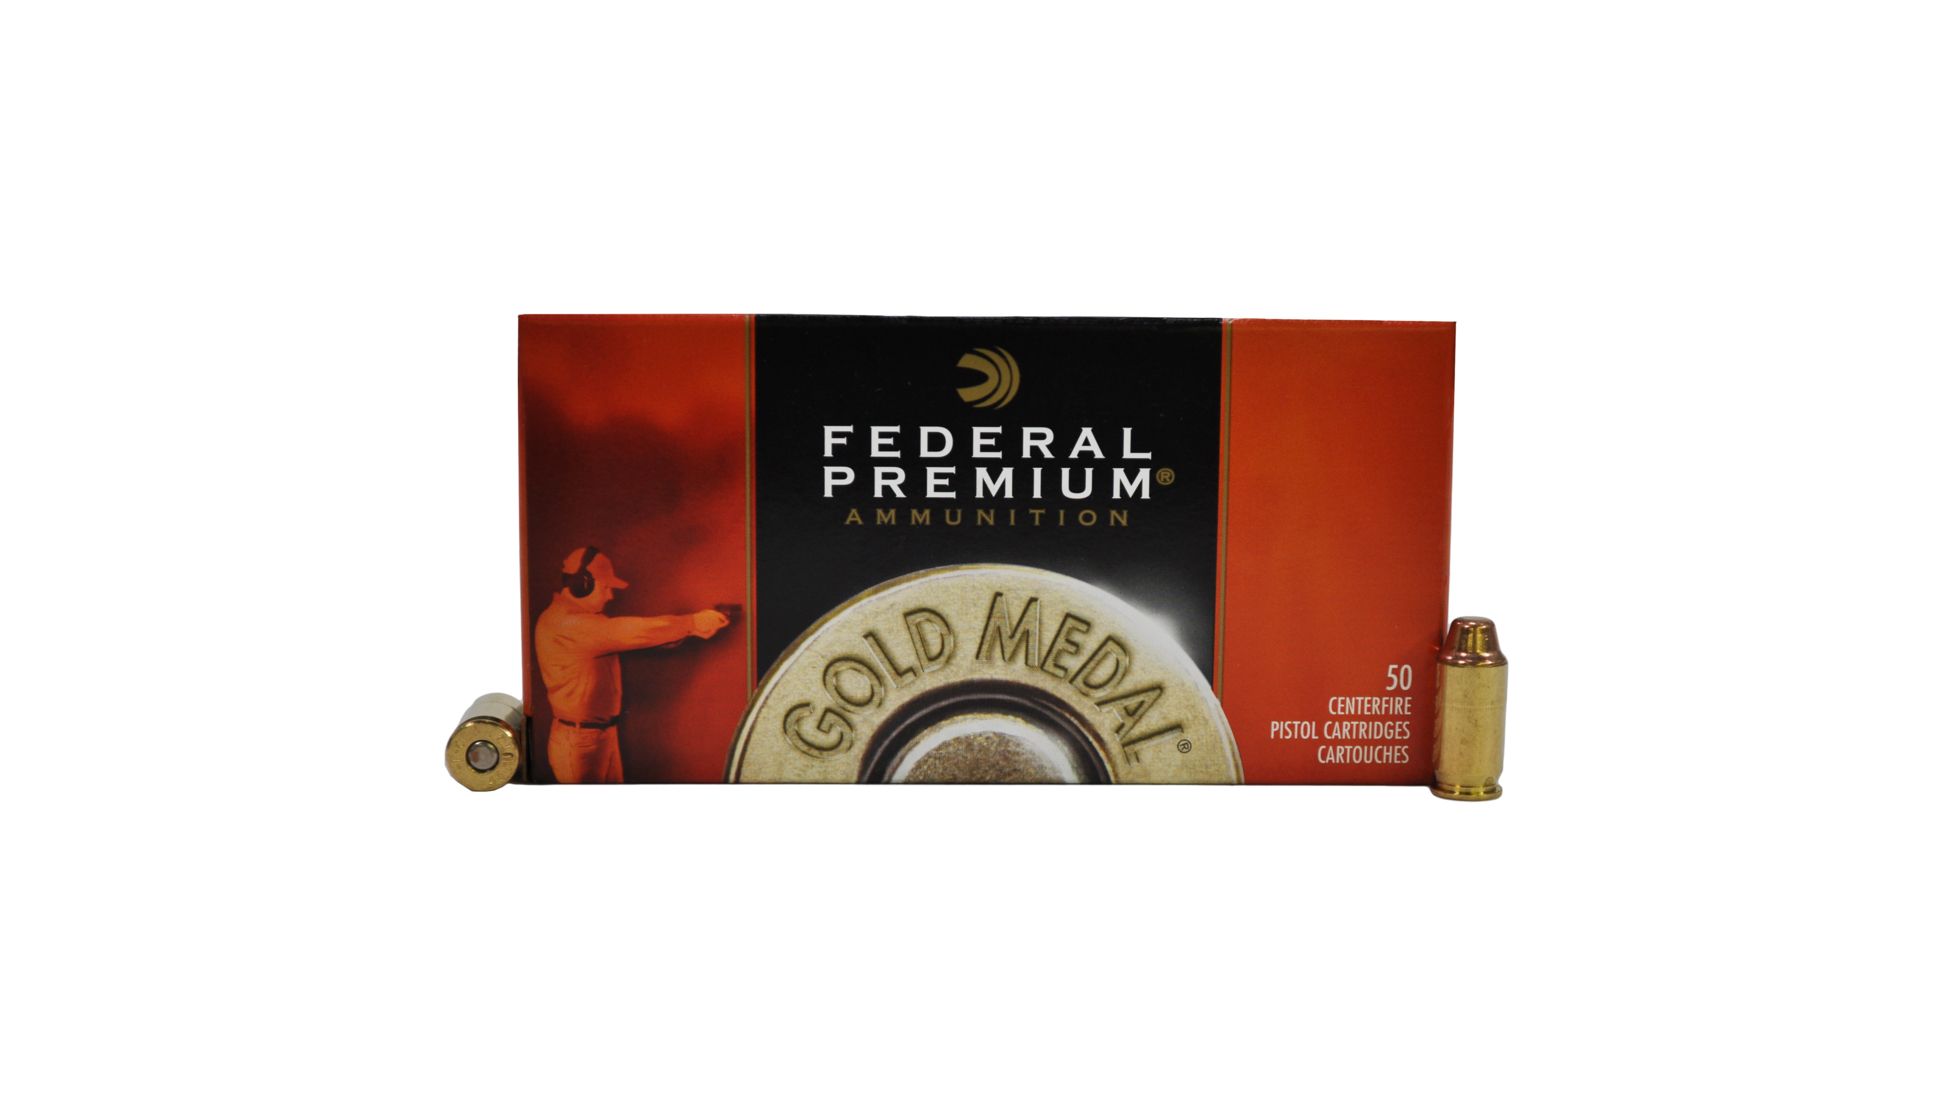 Federal Premium Centerfire Handgun Ammunition .45 ACP 185 grain Full Metal Jacket Semi-Wadcutter Brass Cased Centerfire Pistol Ammunition